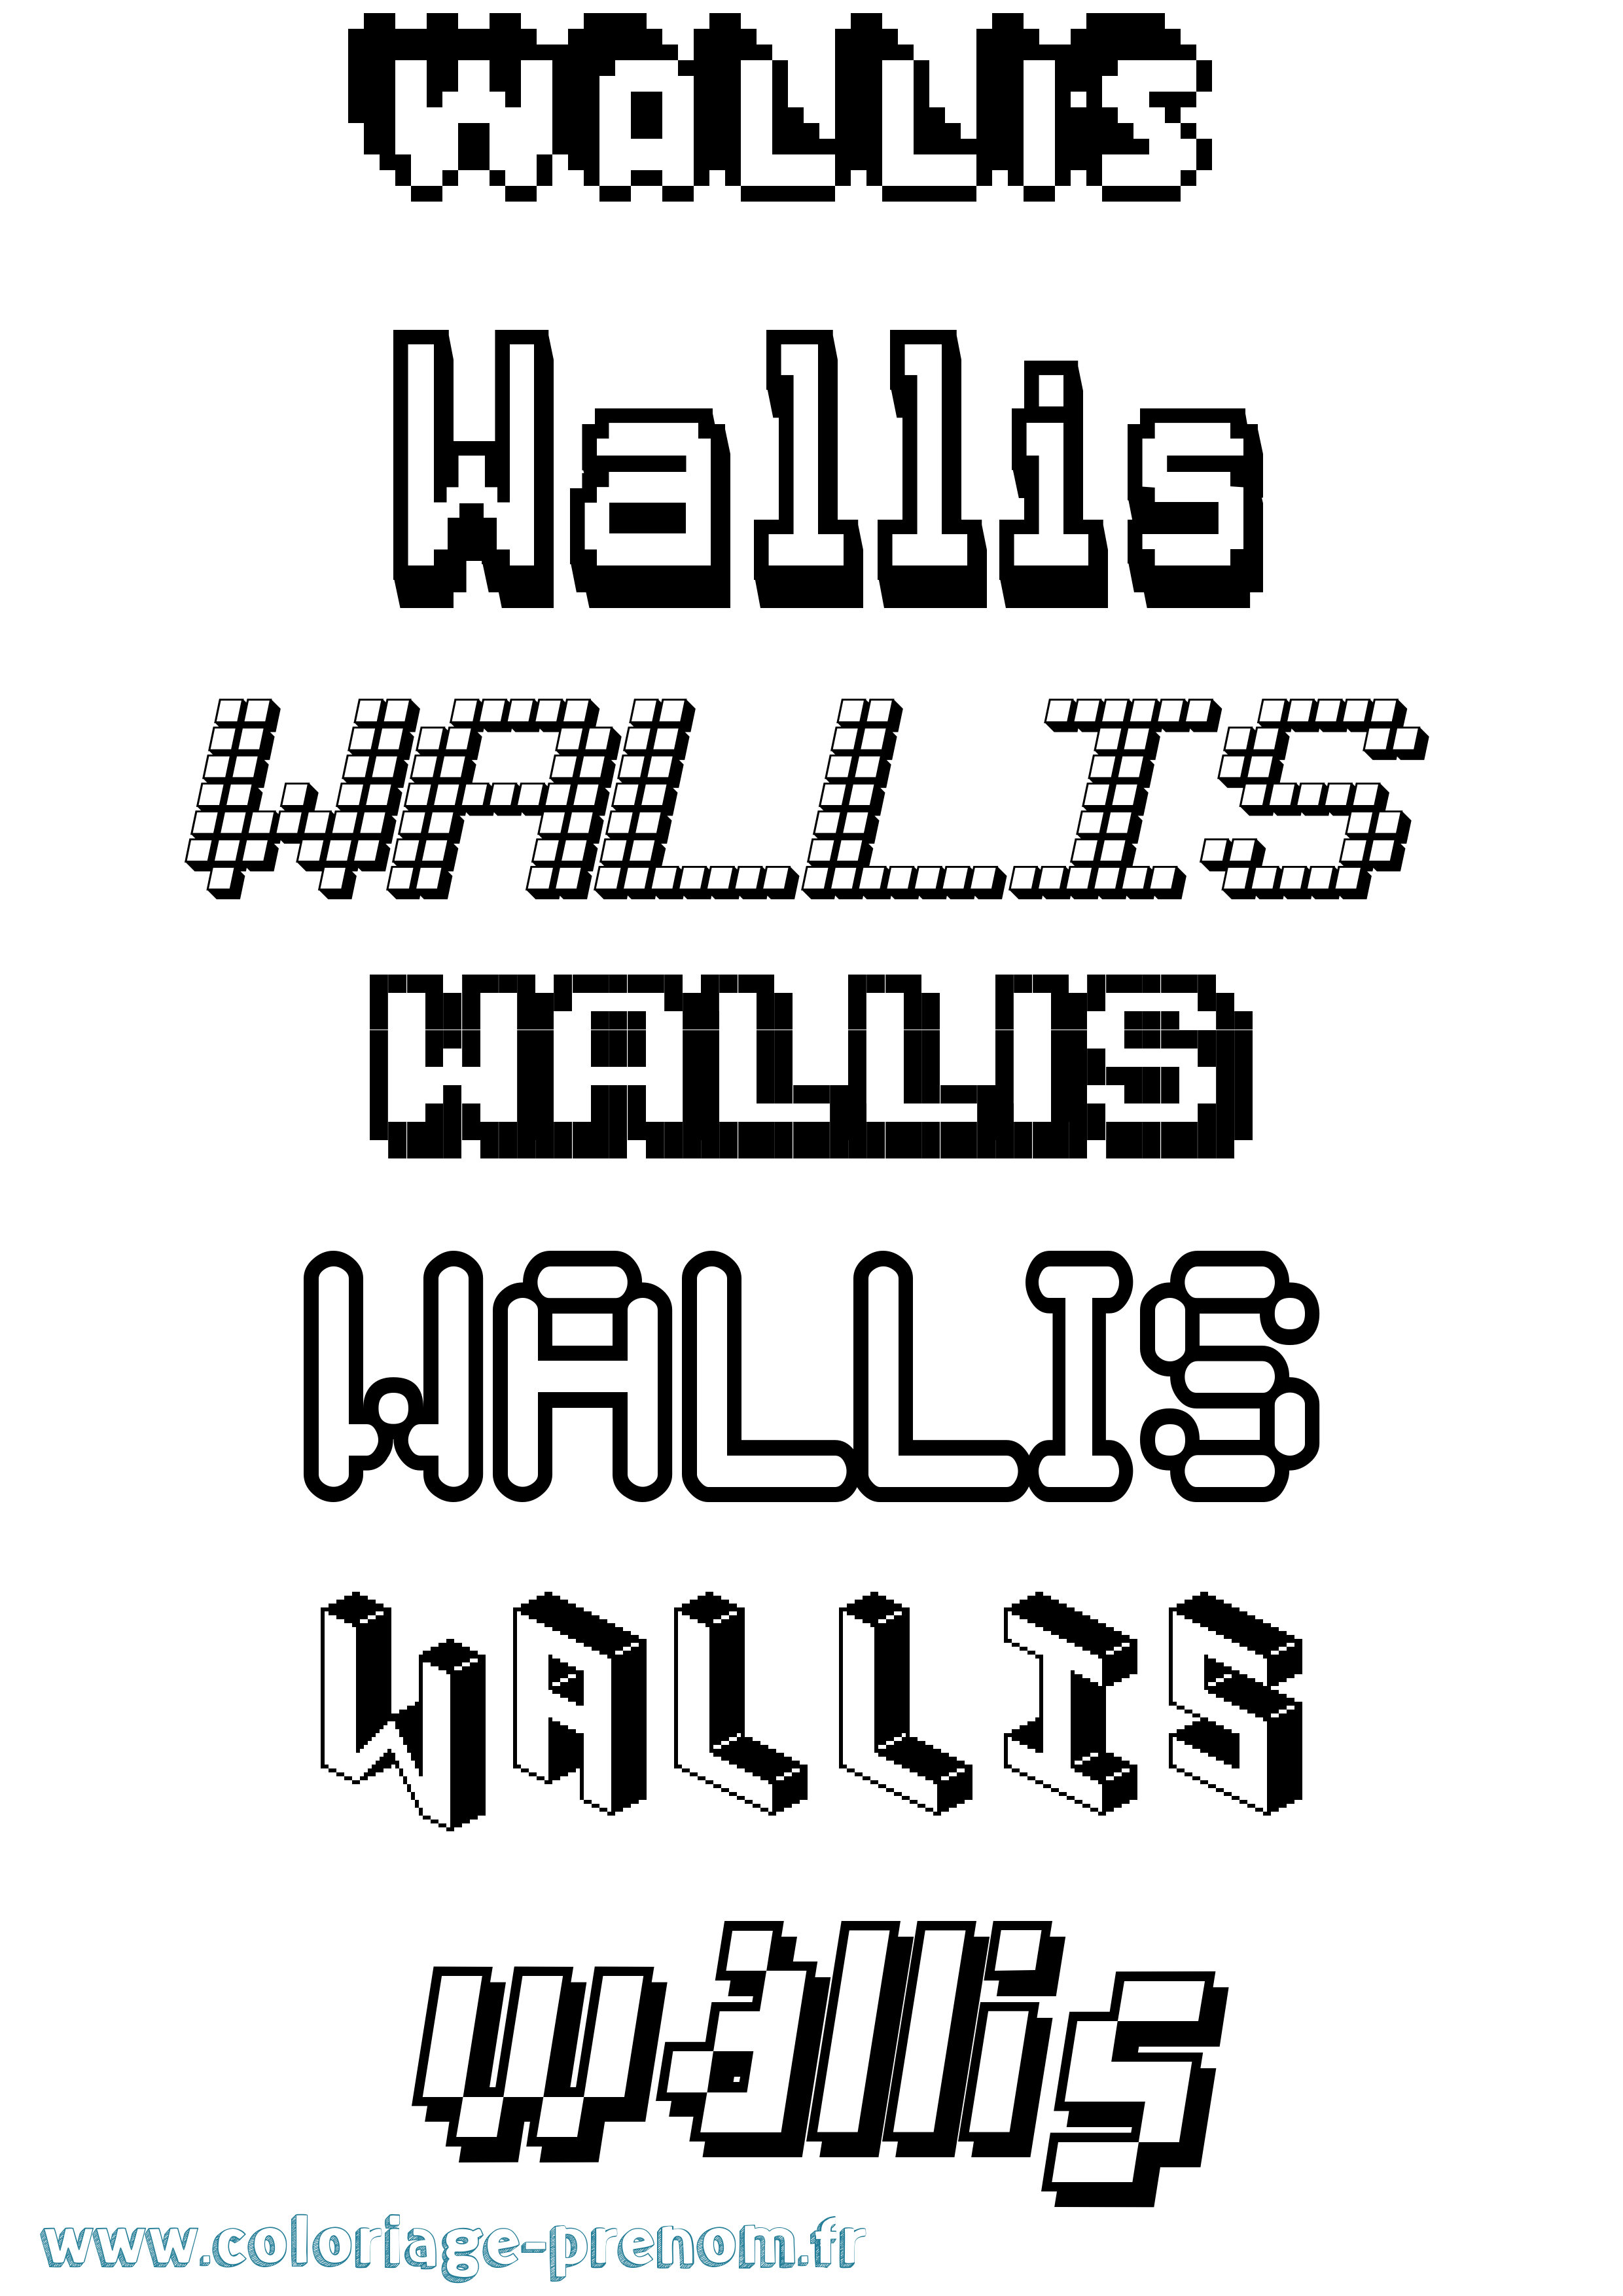 Coloriage prénom Wallis Pixel